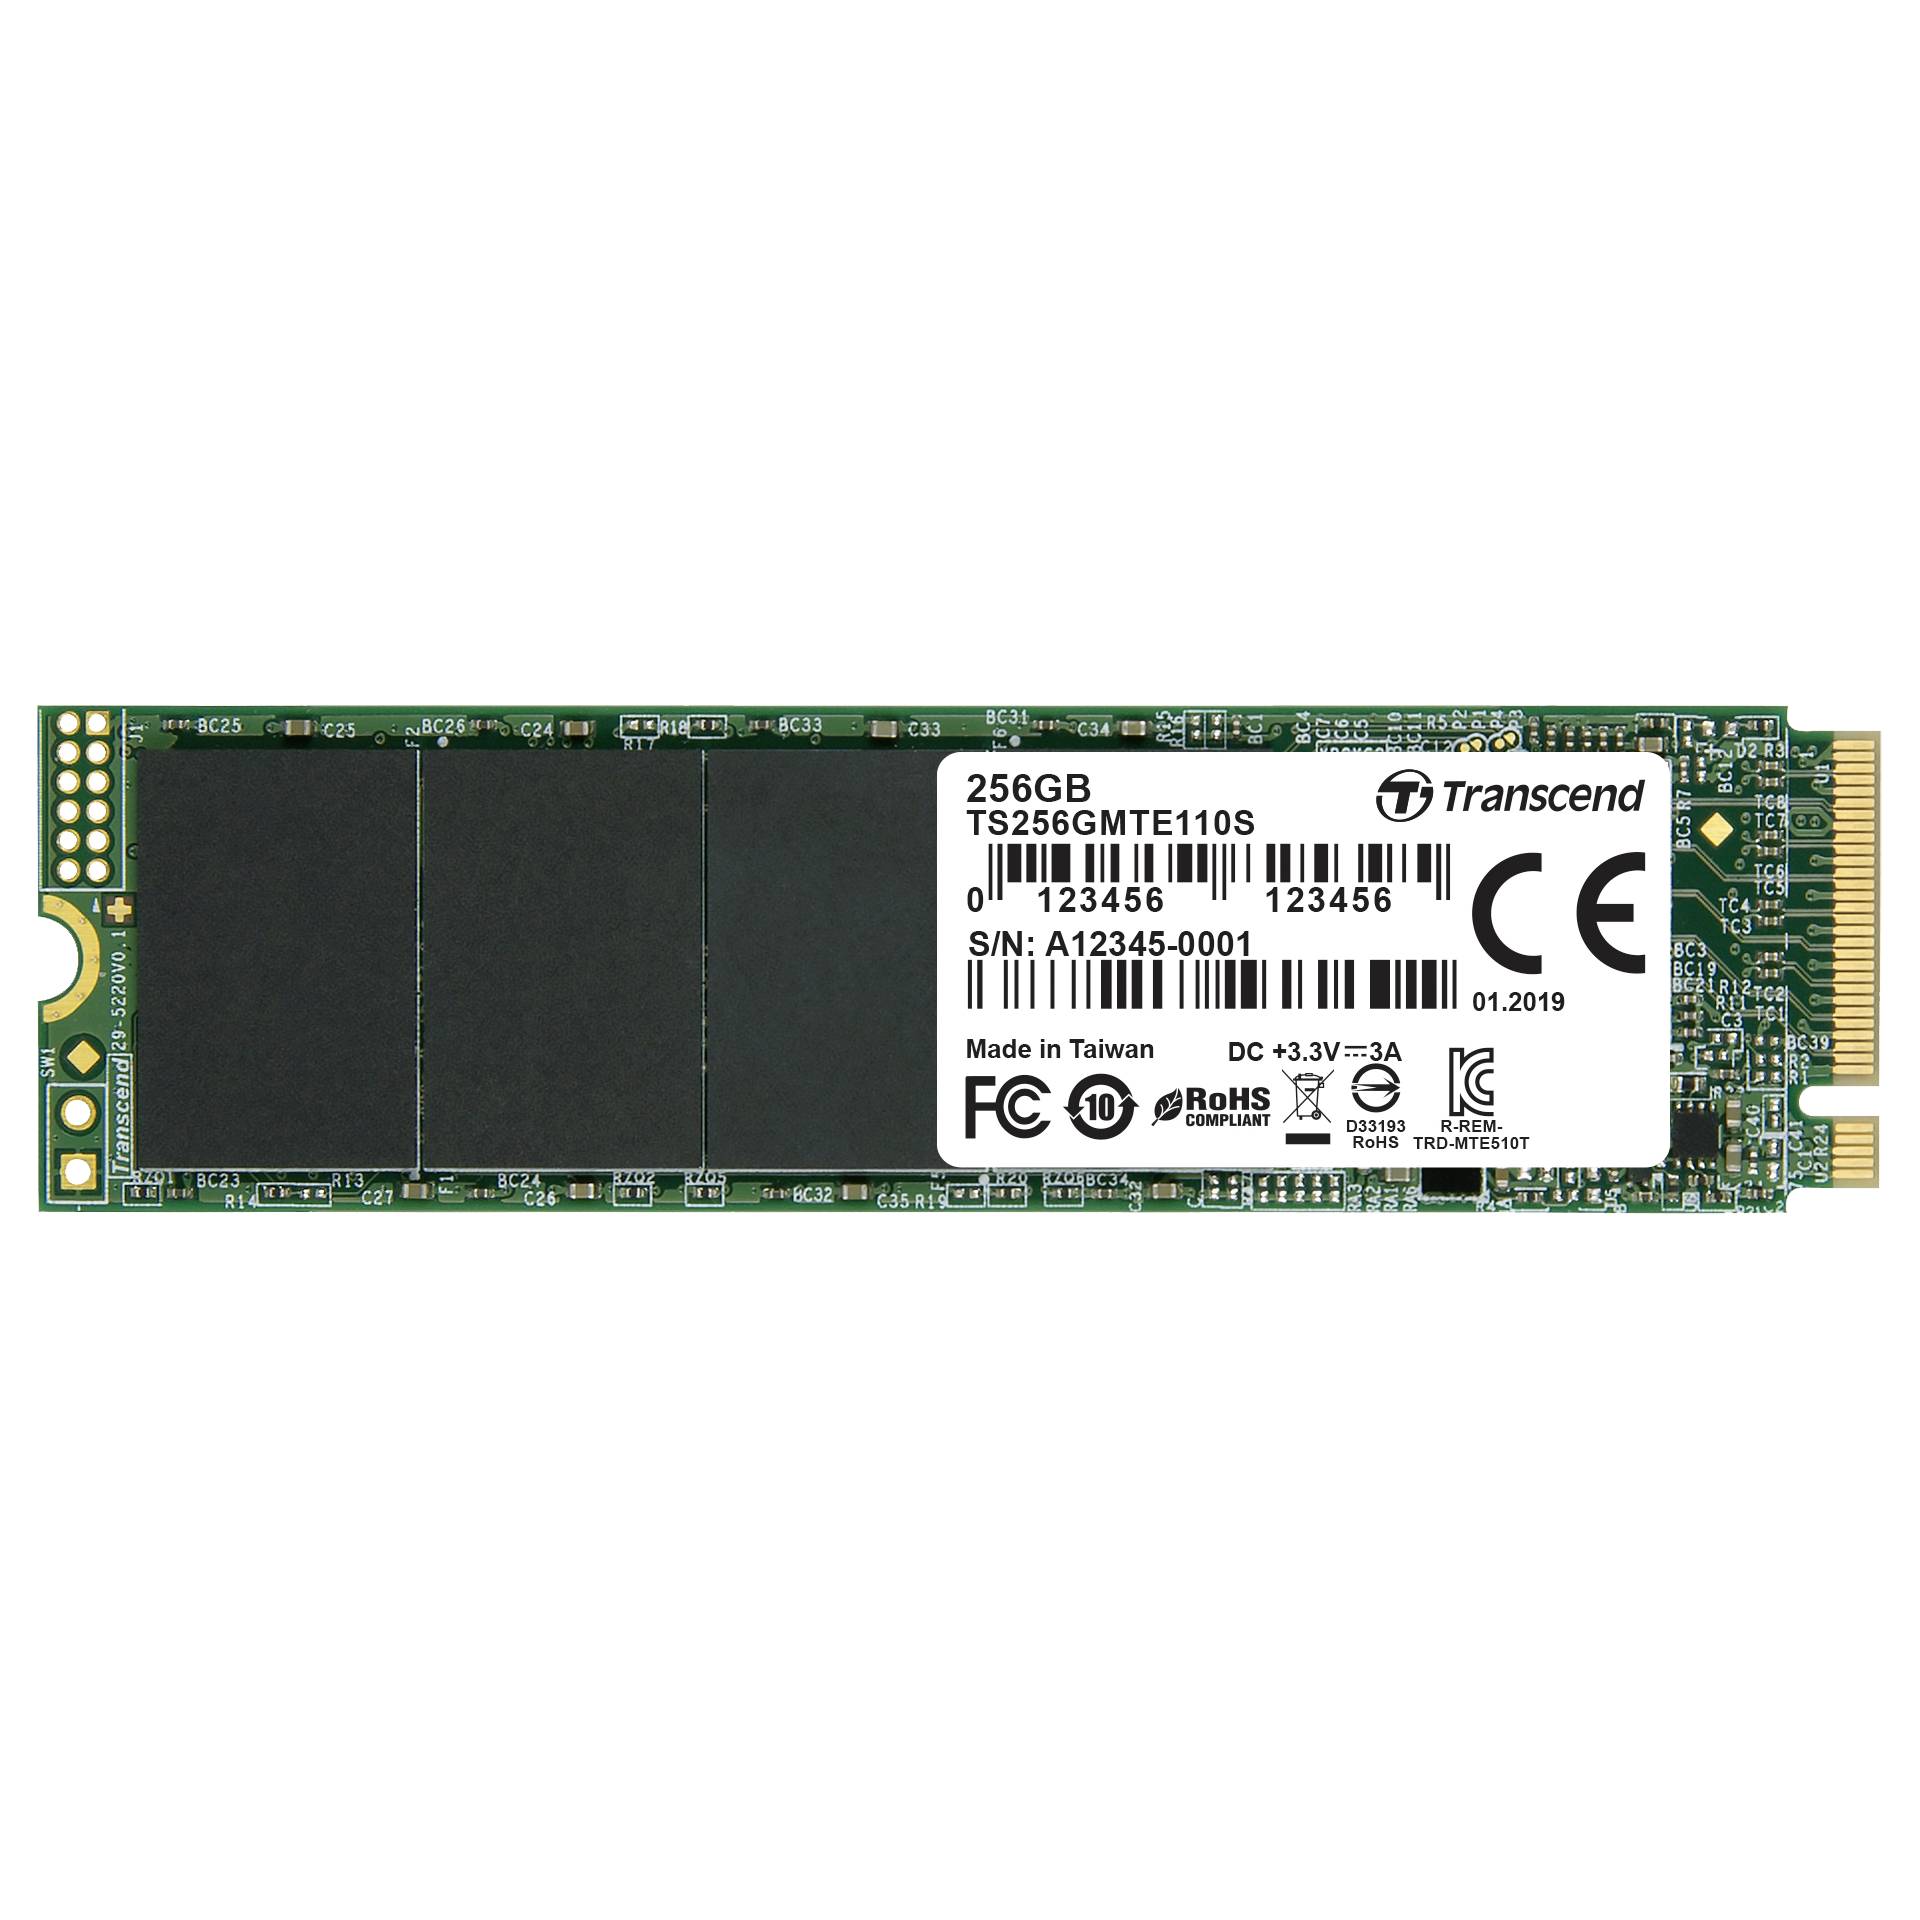 Transcend SSD MTE110S      256GB NVMe PCIe Gen3 x4